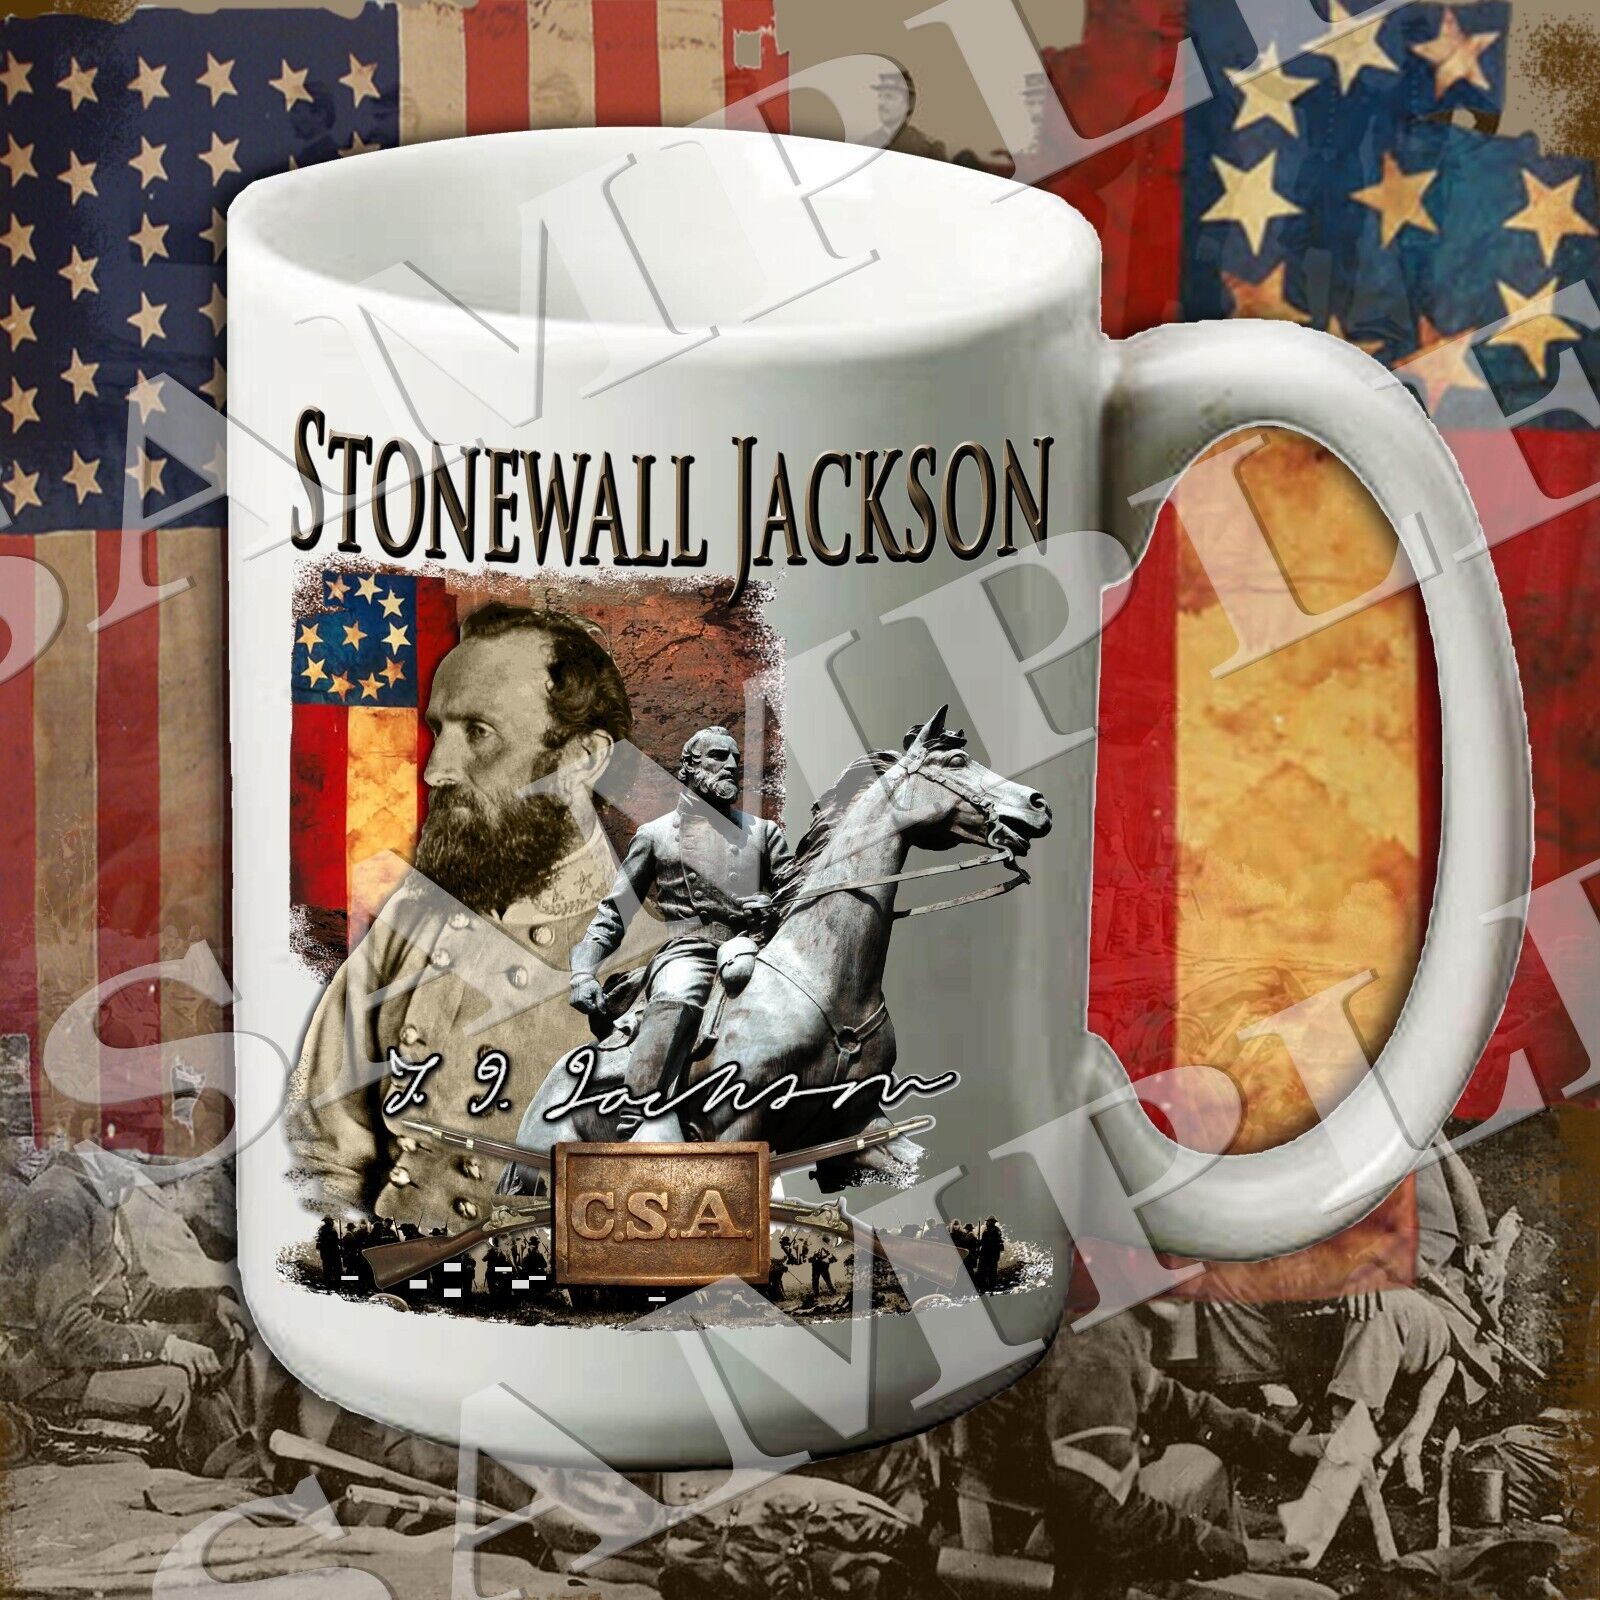 Stonewall Jackson Signature Series 15-ounce Civil War themed coffee mug